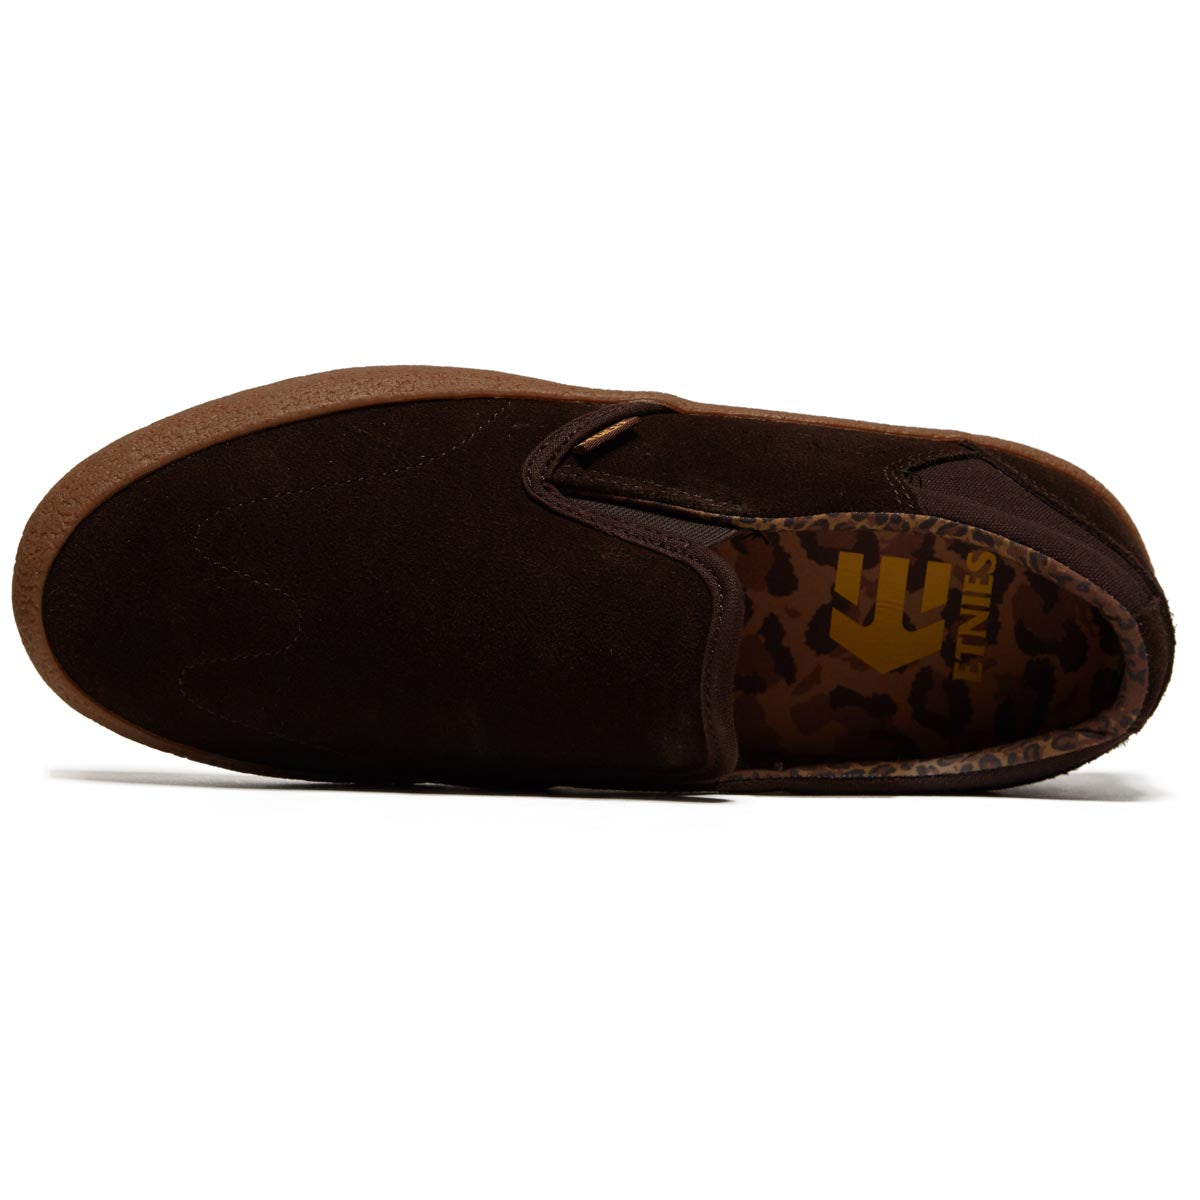 Etnies x Dystopia Marana Slip Shoes - Brown/Gum image 3